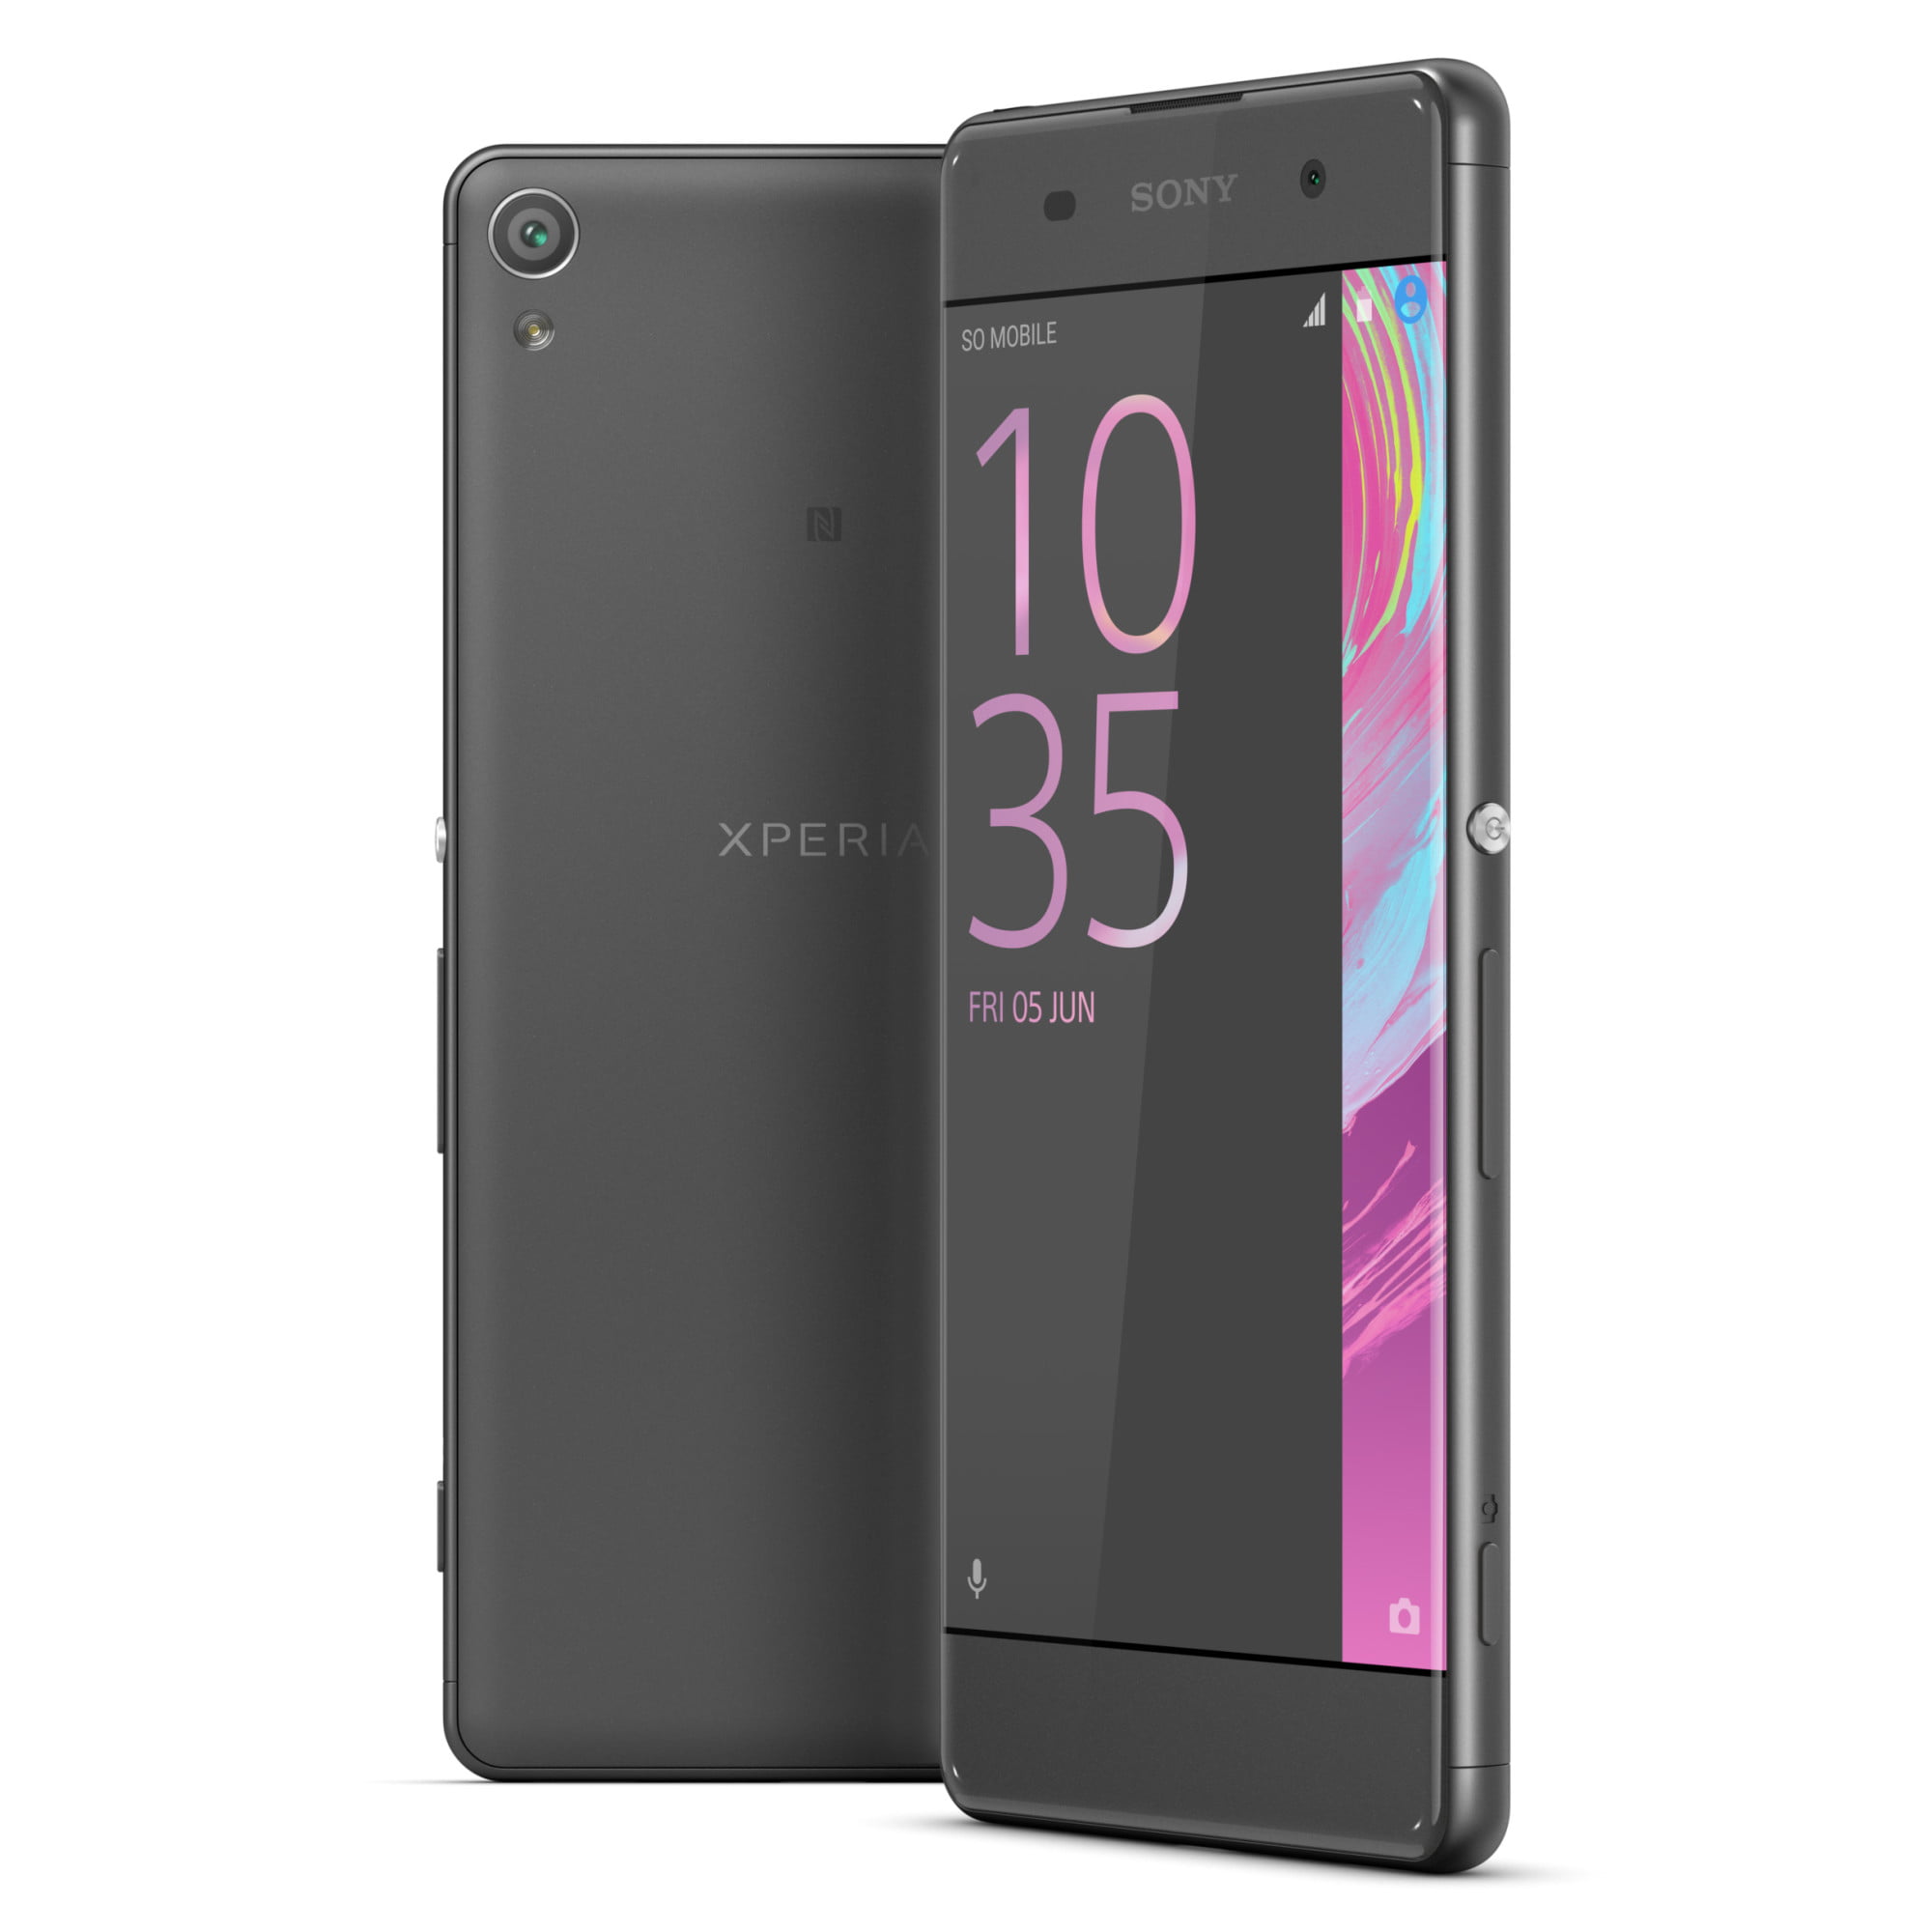 hop Overtreding Harden Sony Xperia XA 16GB 5-Inch Smartphone, Unlocked - Graphite Black -  Walmart.com